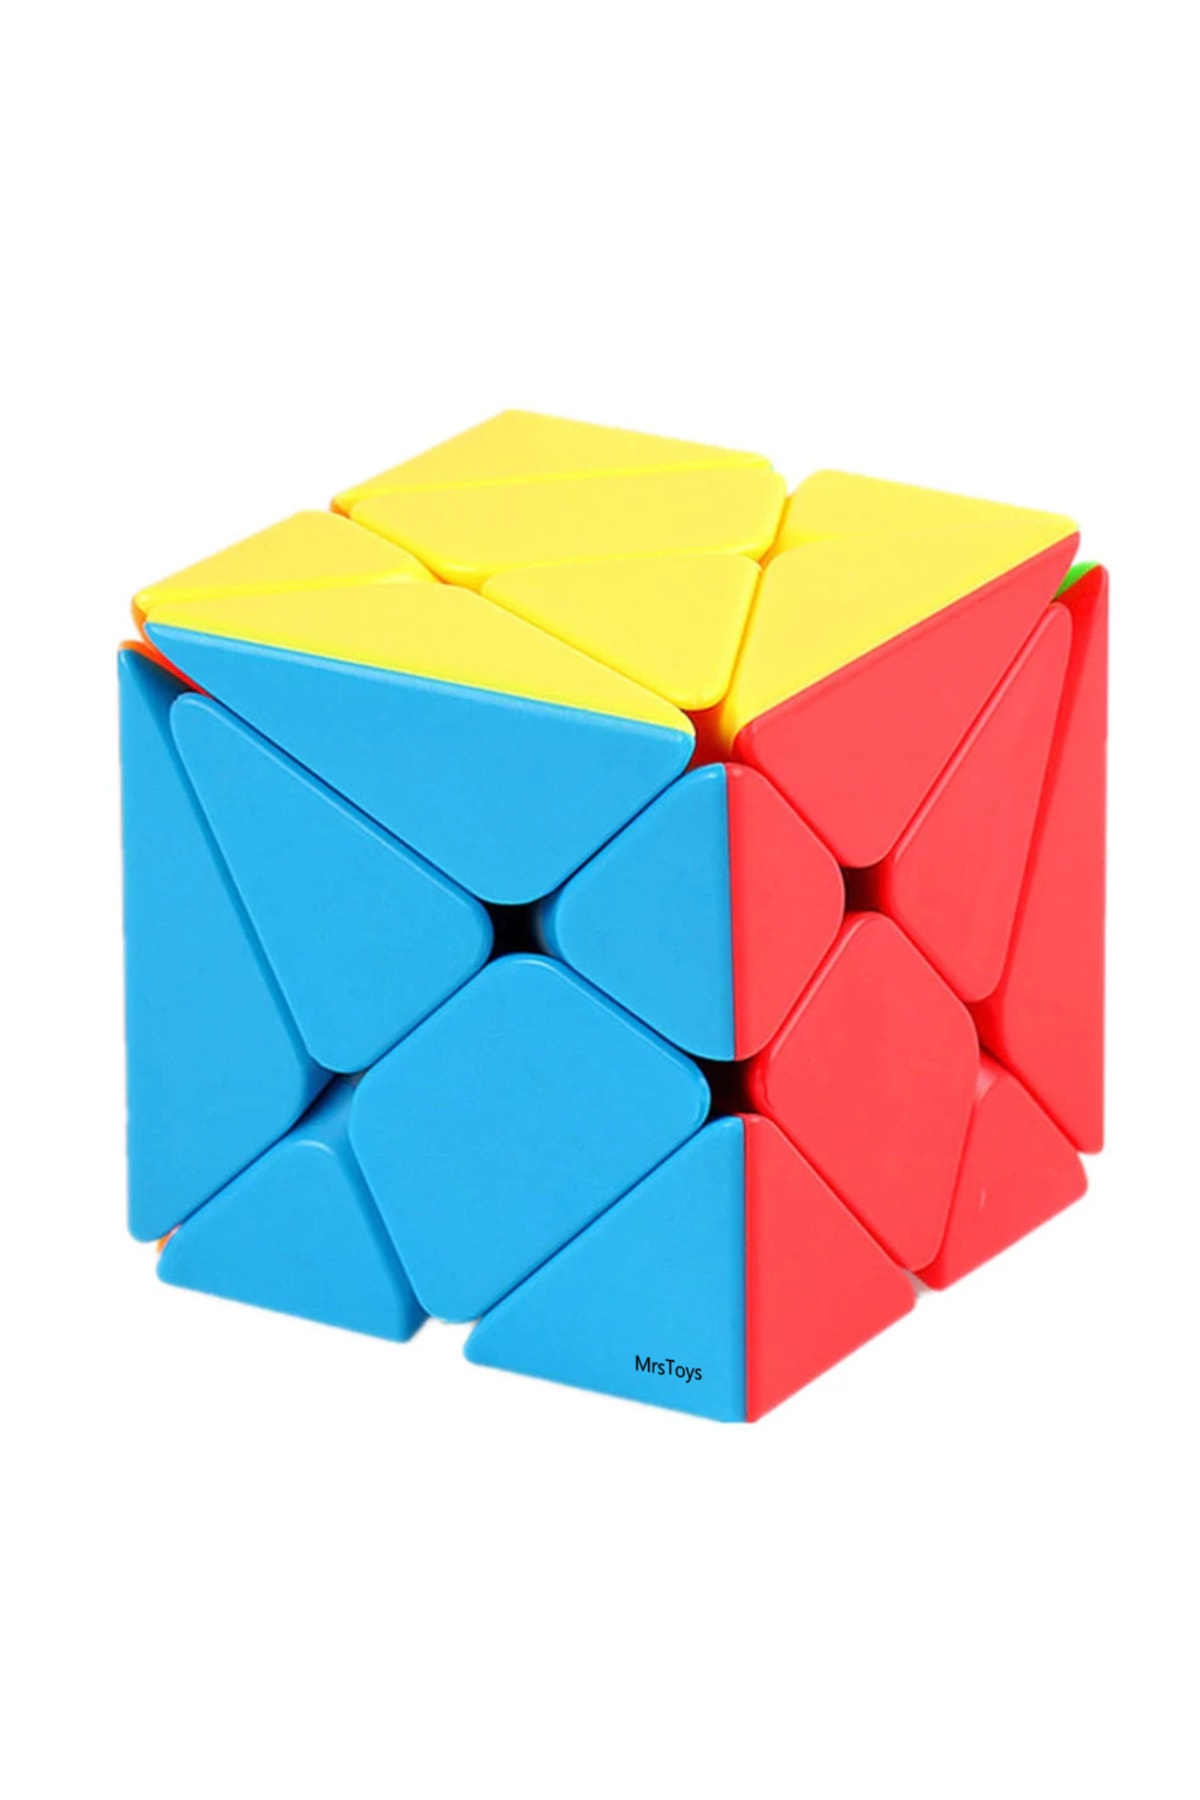 MRSTOYS Mgc B2 Axis Cube 3x3 Zeka Sabır Küpü Akıl Küpü Sihirli Küp